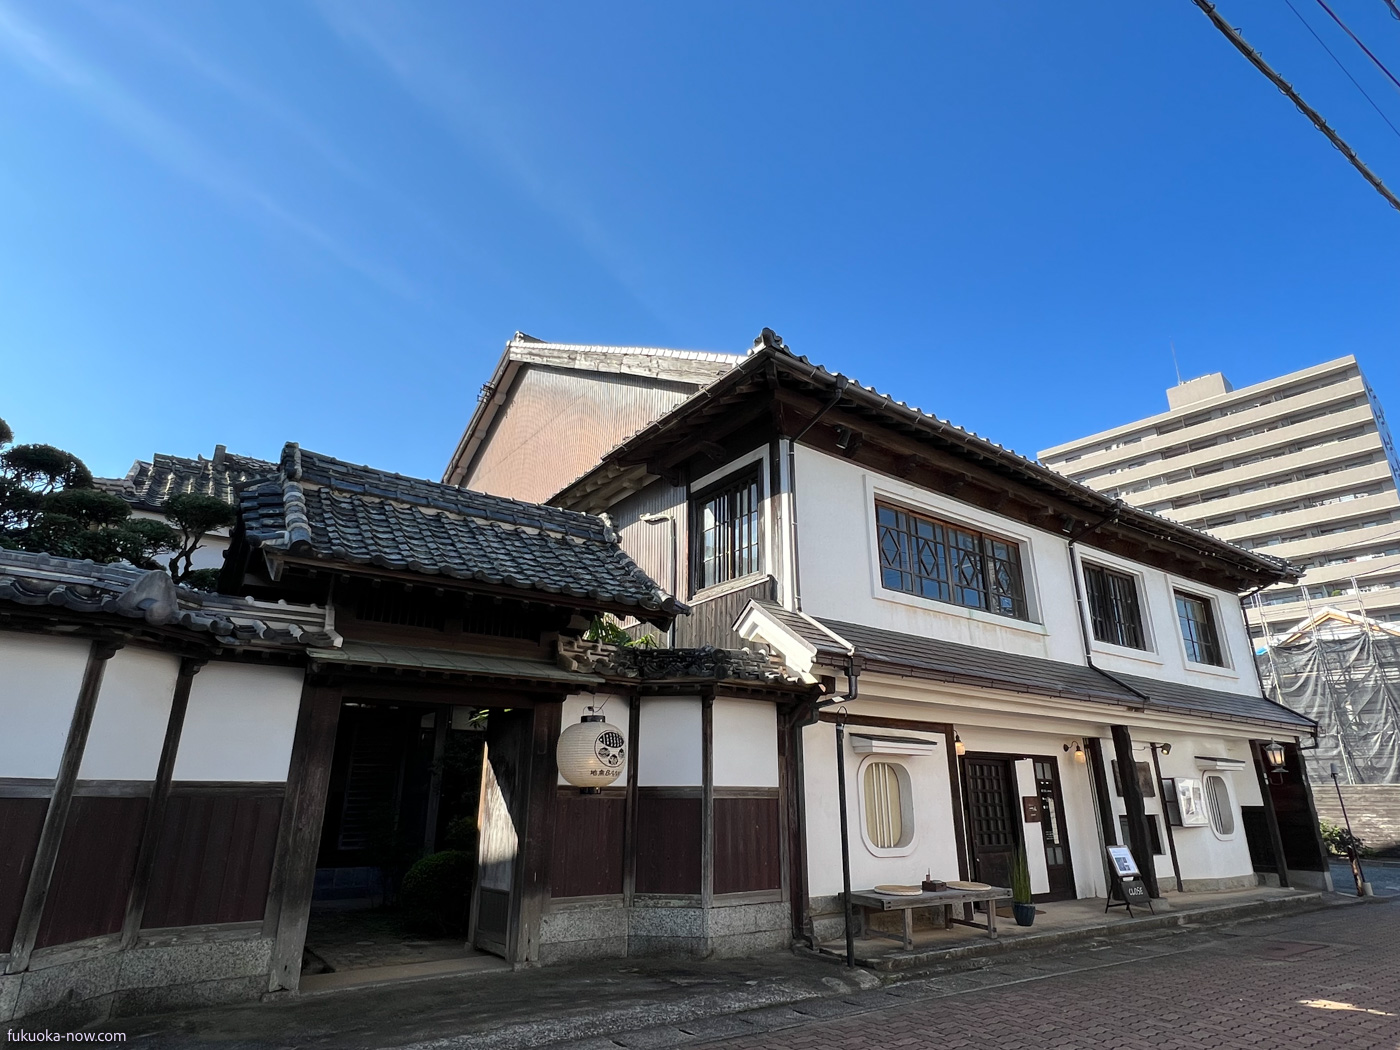 Kozainomori in Maebaru, Itoshima, 糸島前原商店街の古材の森